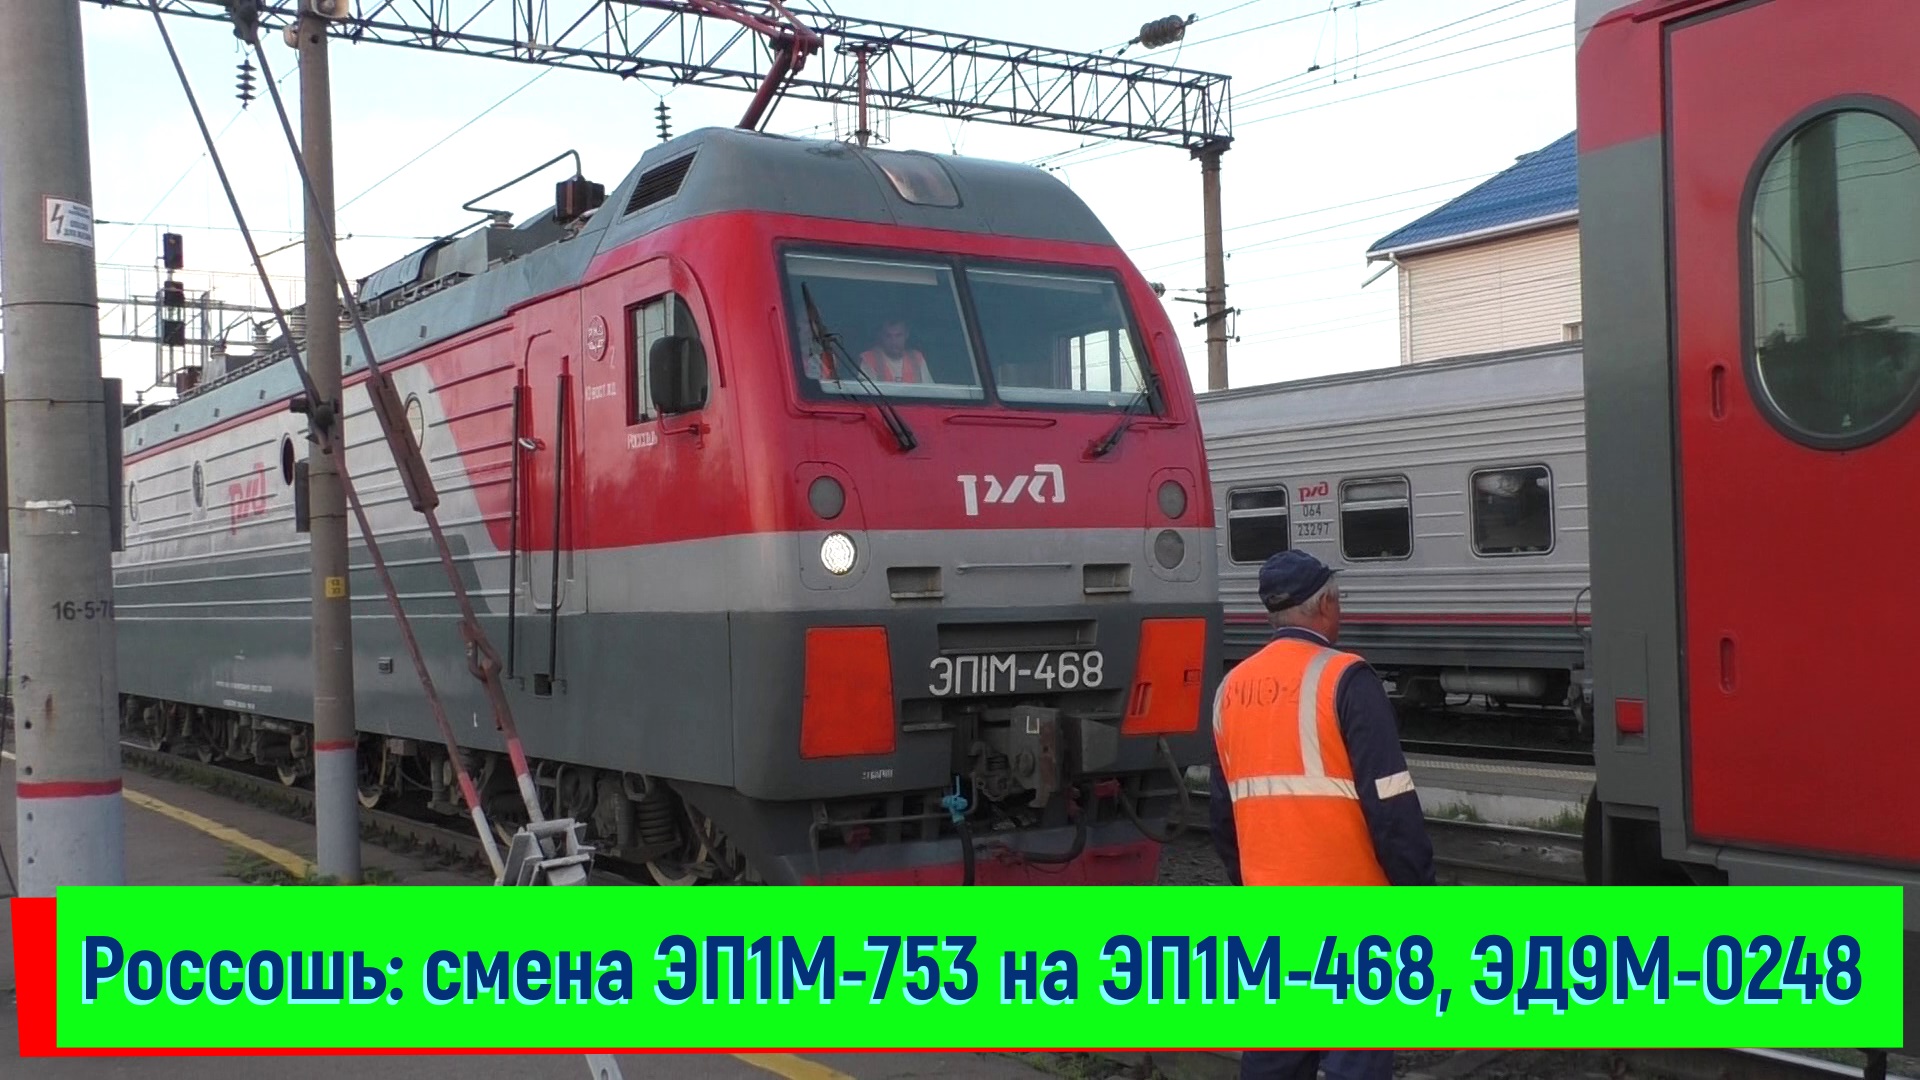 Смена электровоза ЭП1М-753 на ЭП1М-468, подача под посадку ЭД9М-0248 — станция Россошь